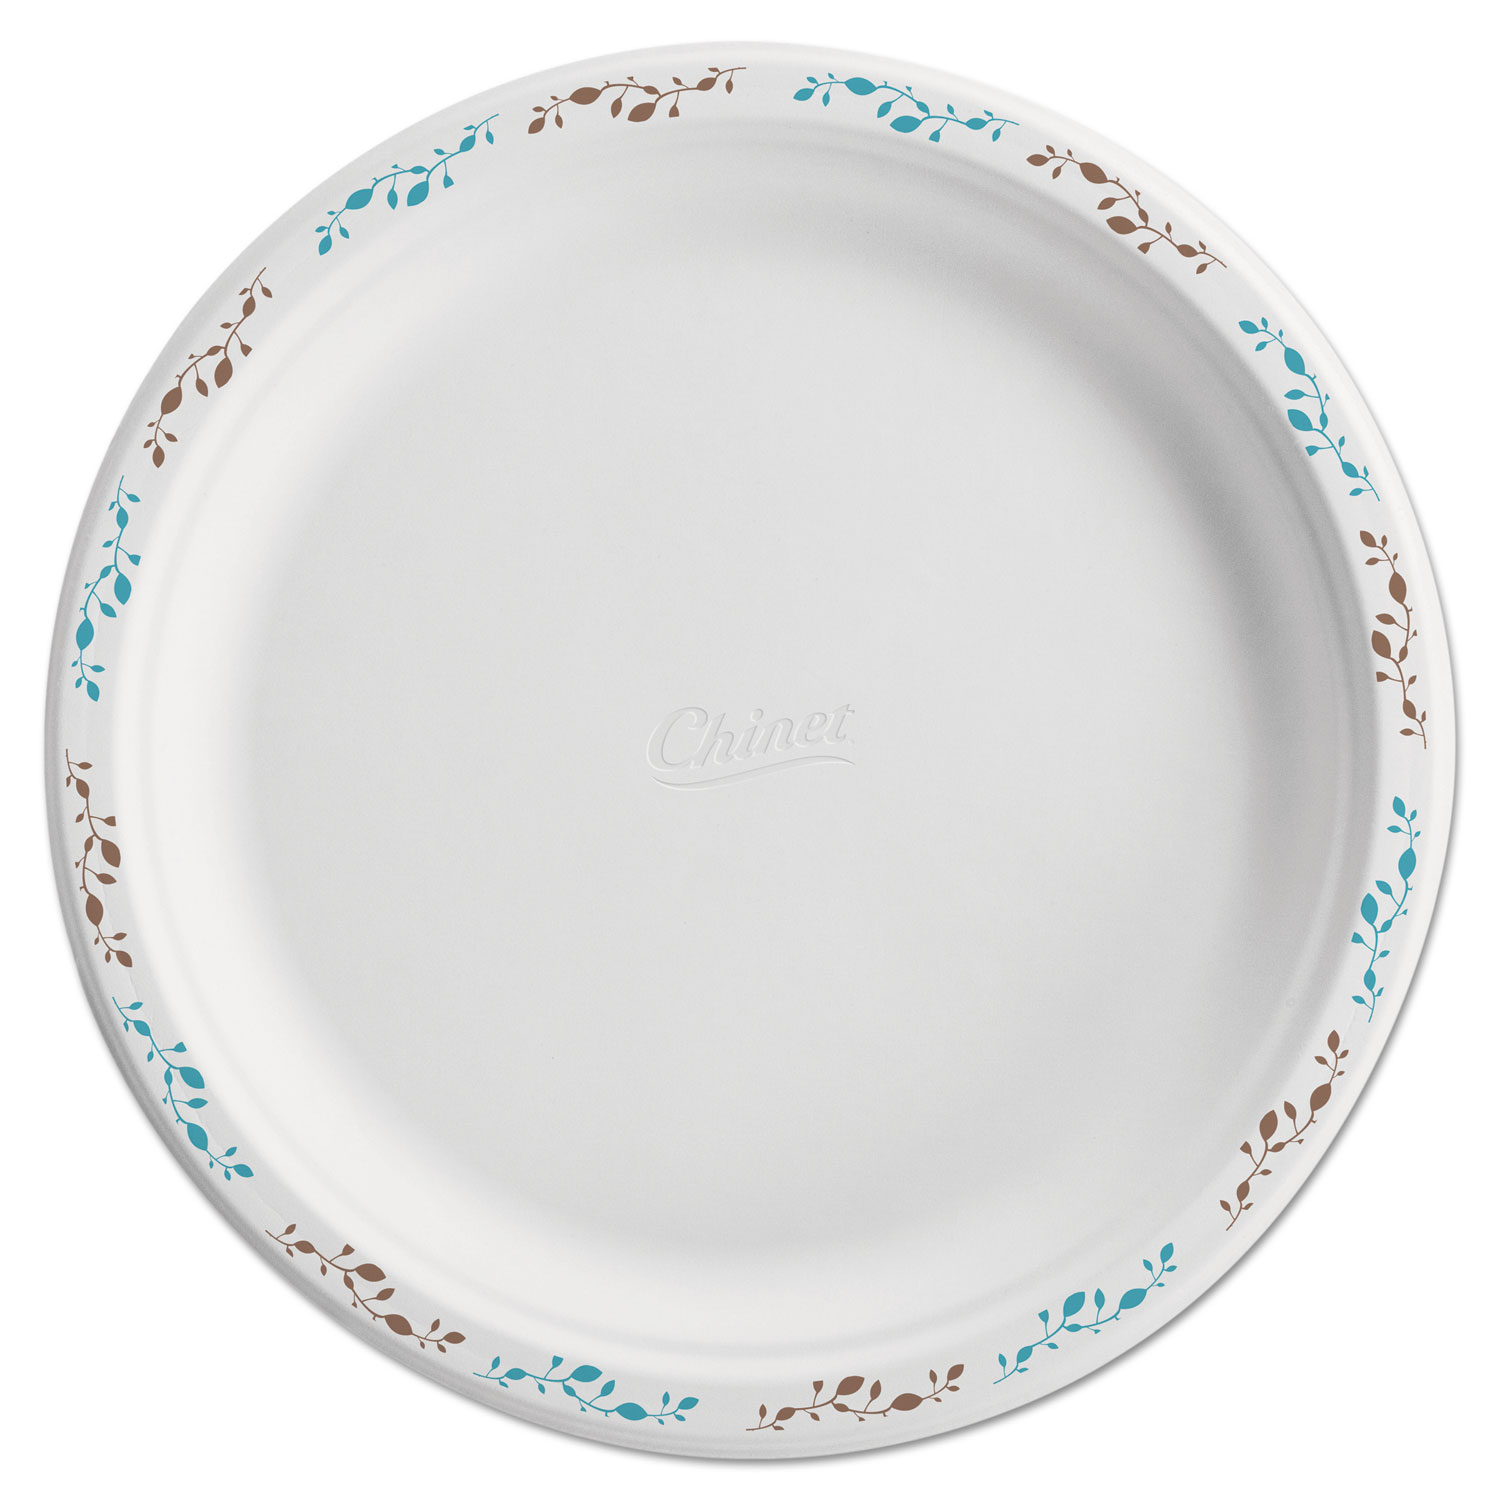  Chinet 22519 Molded Fiber Dinnerware, Plate, 10 1/2Dia, WH, Vines, 125/Pack, 4 Packs/Carton (HUH22519) 